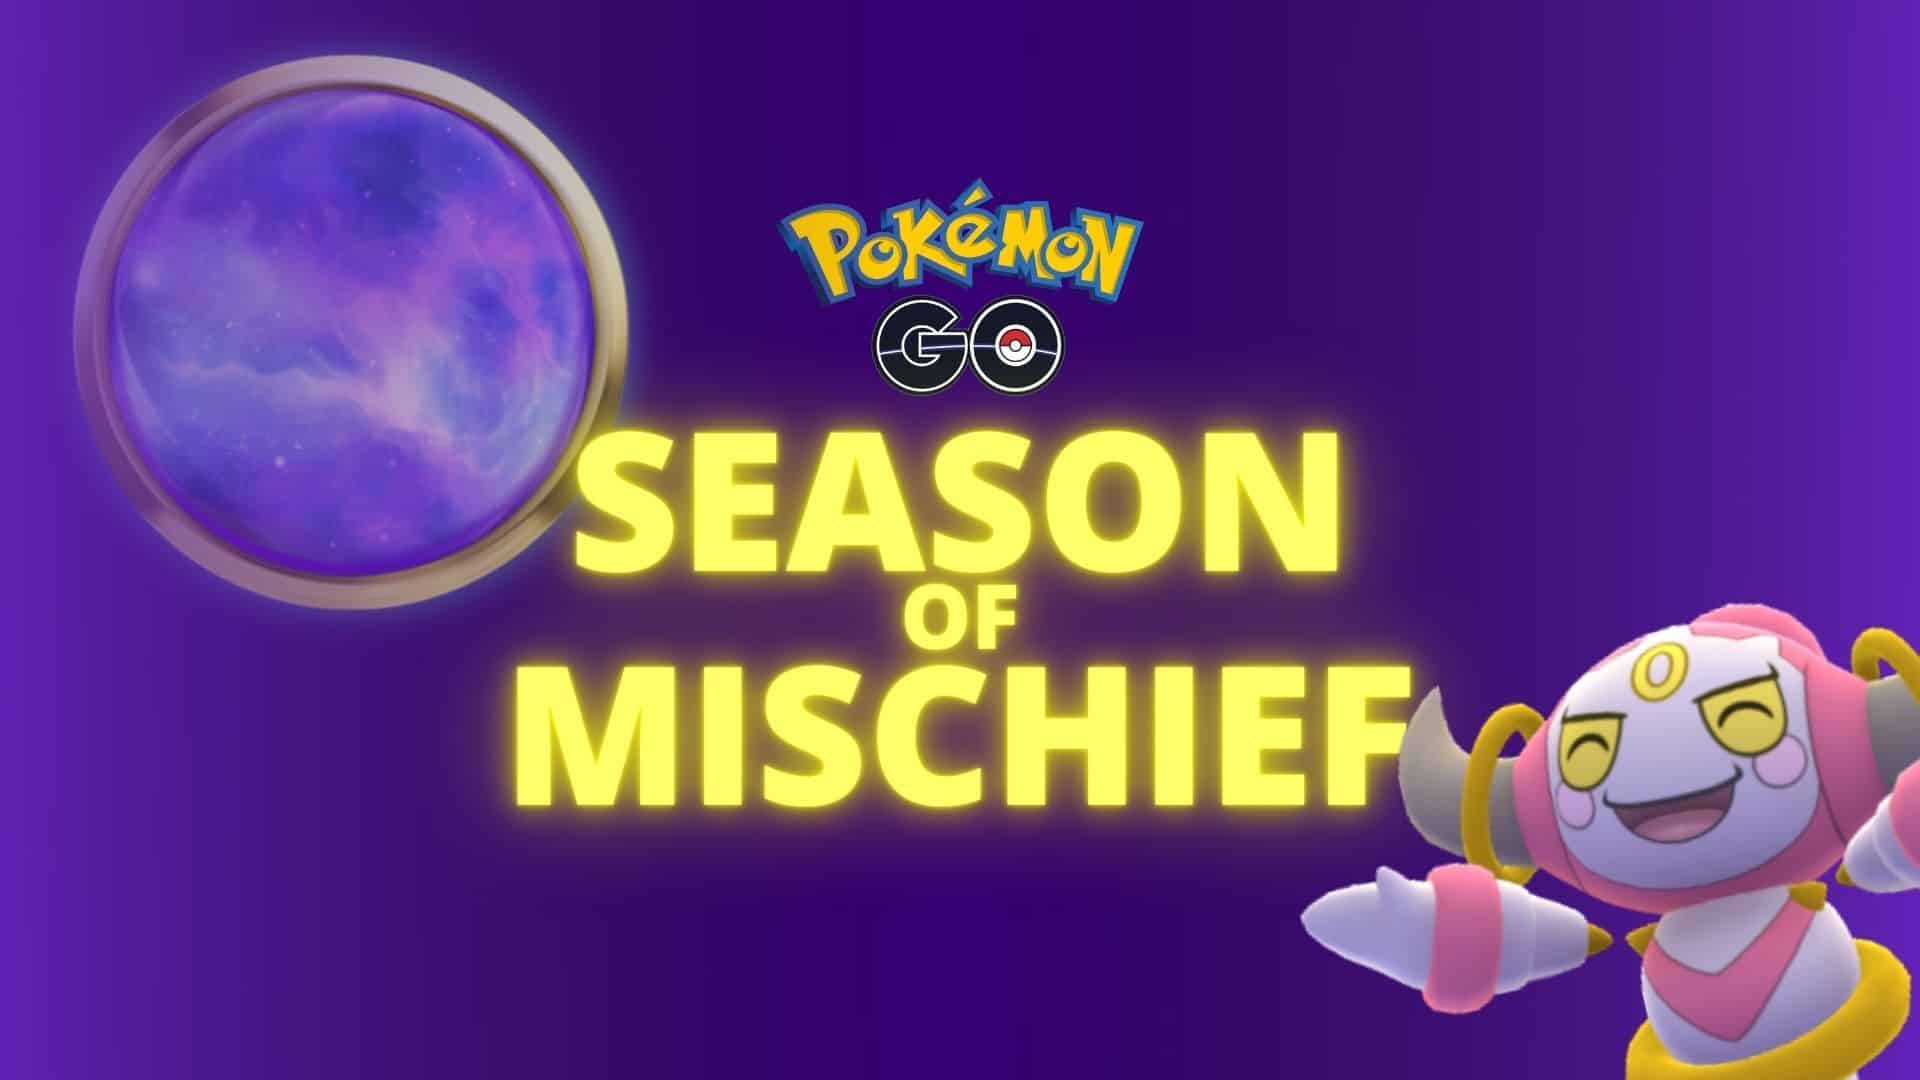 This Week In Pokemon Go: Season Of Mischief Finale, Go Battle